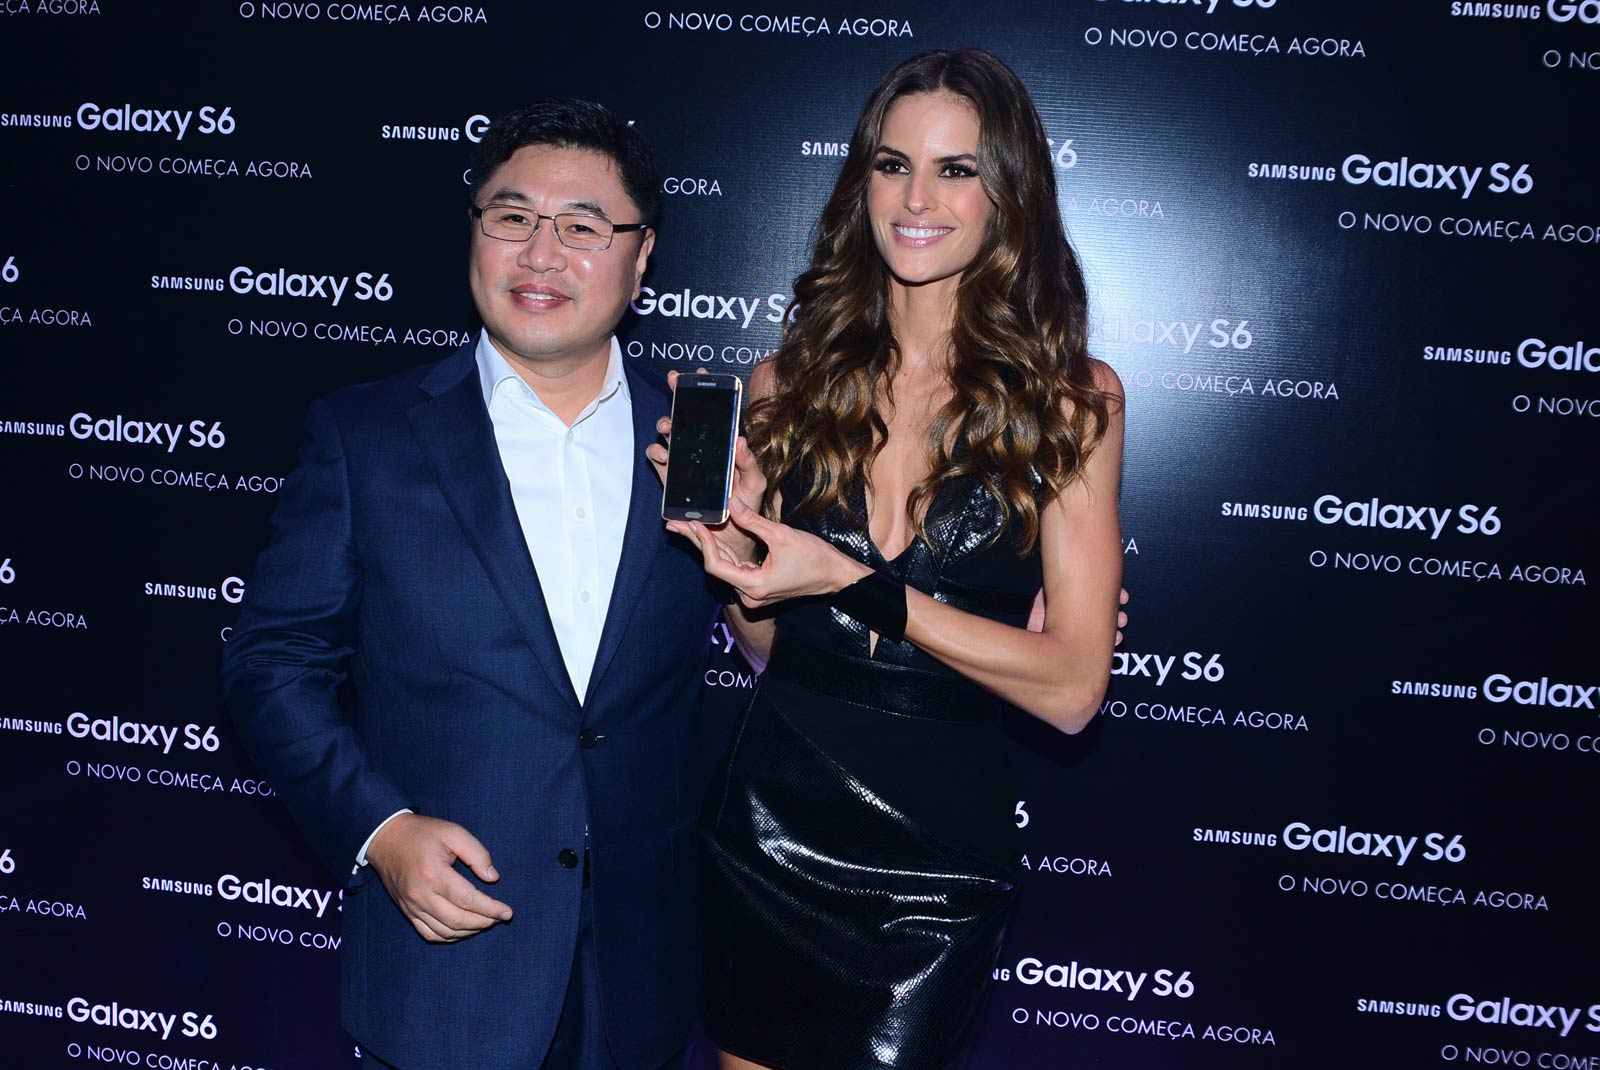 Izabel Goulart attends Samsung Galaxy S6 & S6 edge launch